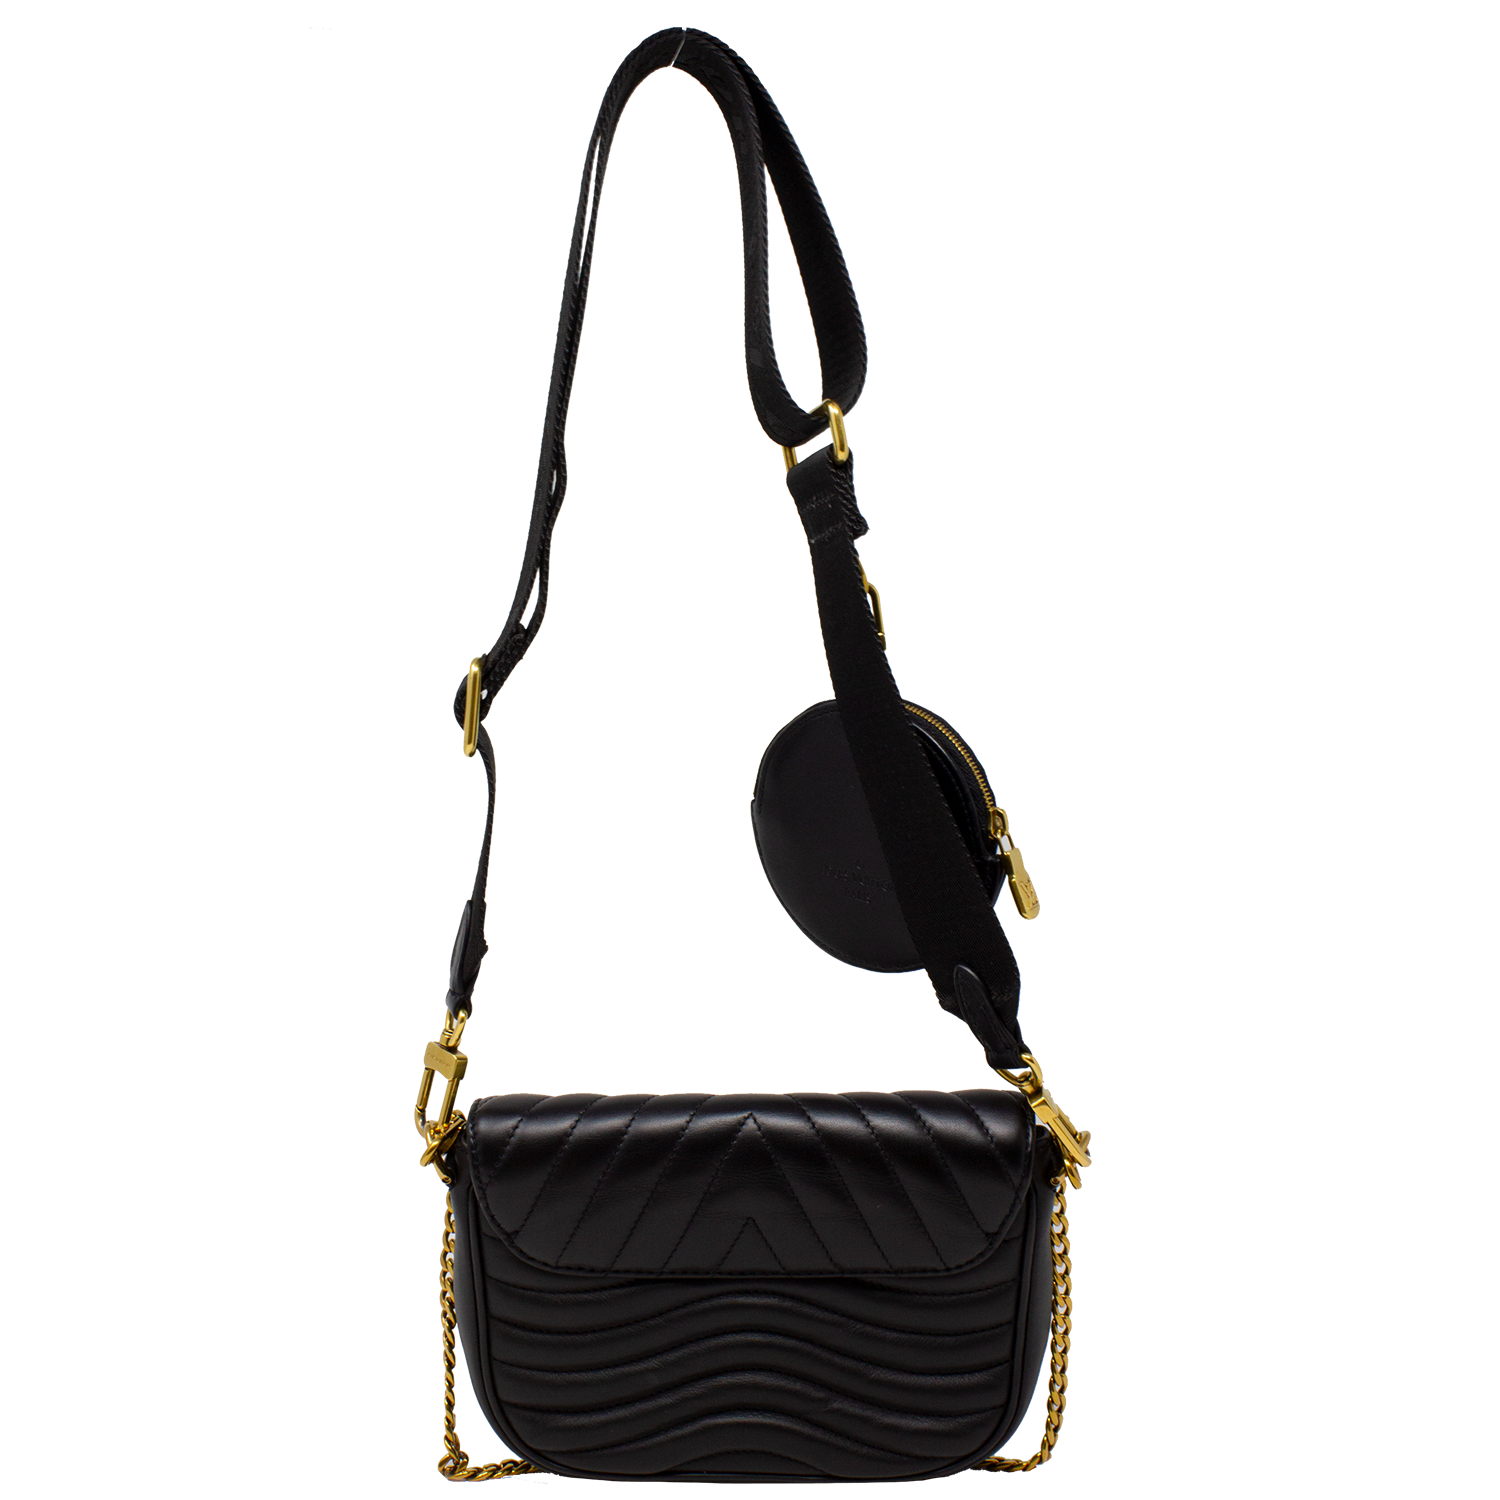 Louis Vuitton New Wave Handbag 390597